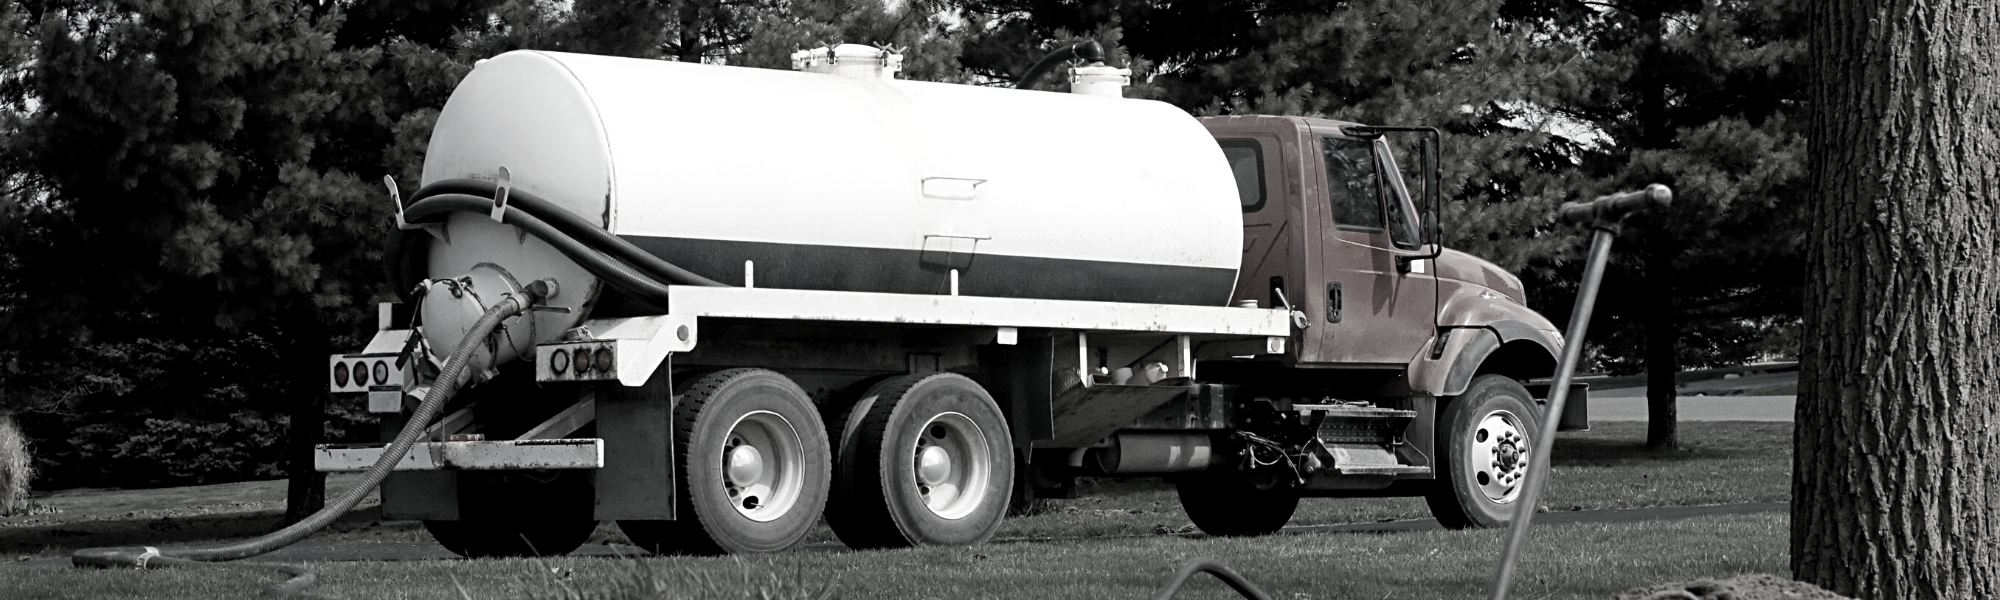 septic tank truck pumping a septic tank 